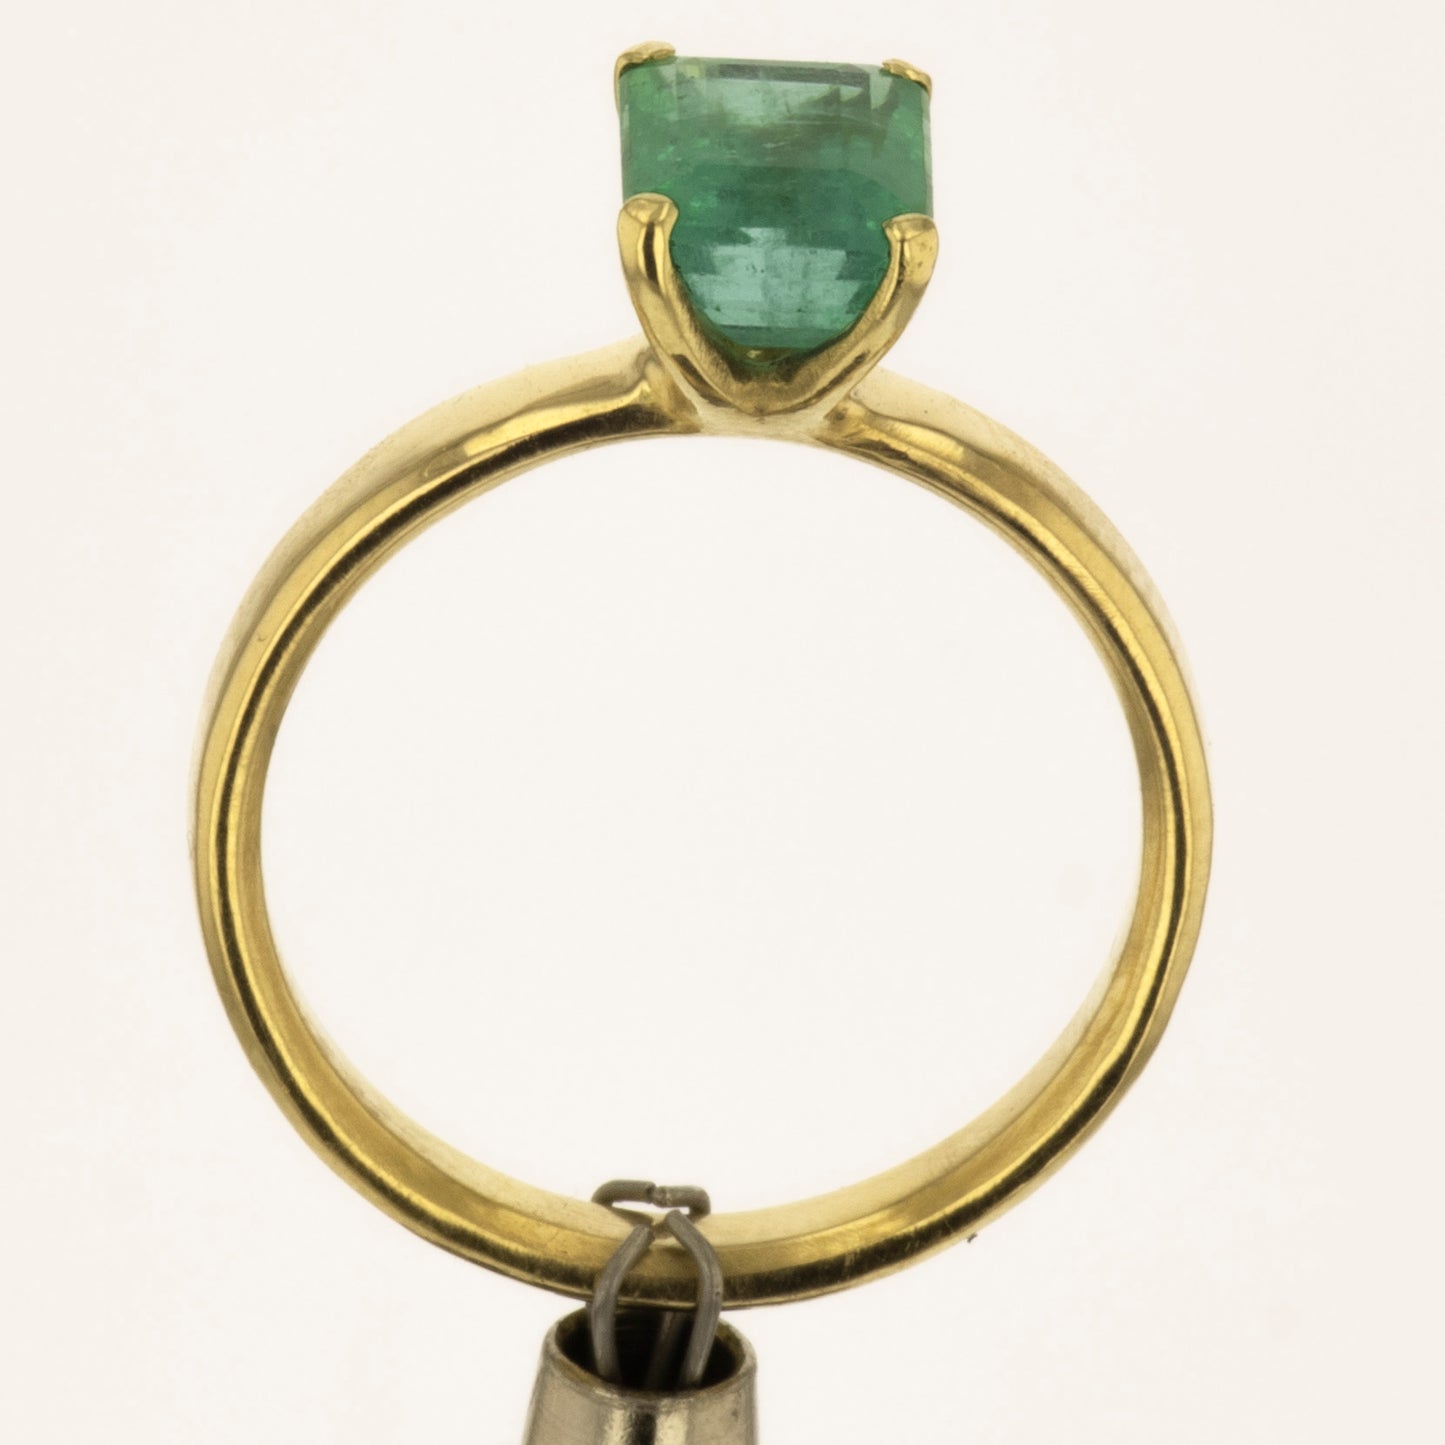 Emerald ring Birmingham UK